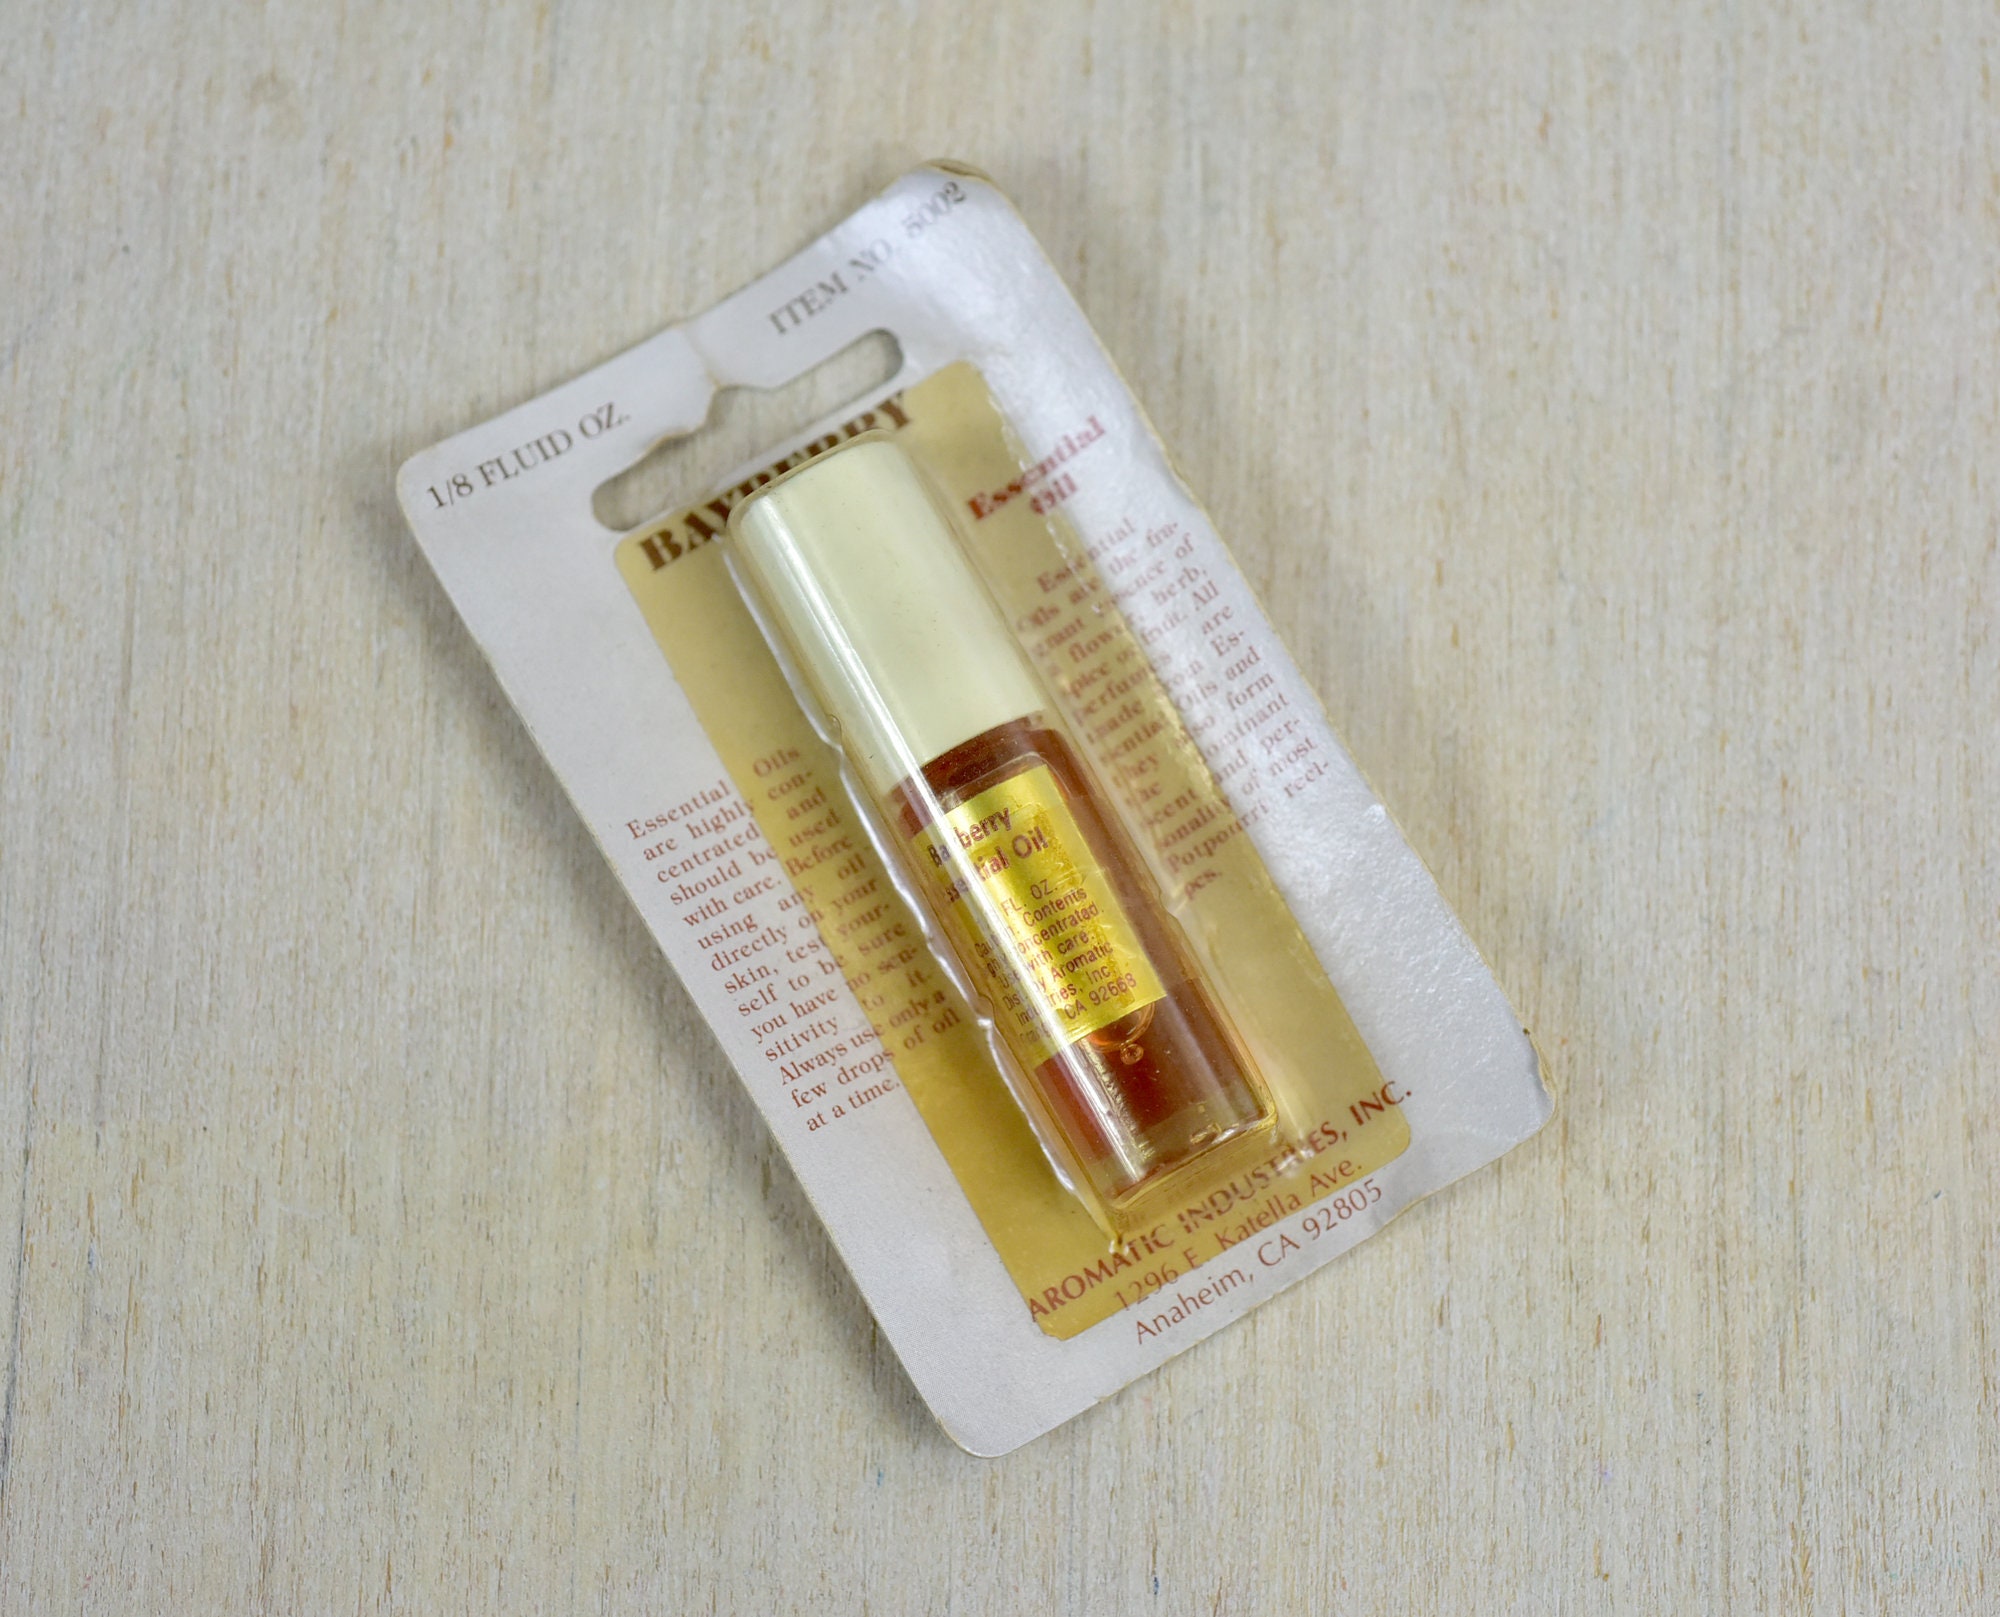 HIQILI 1000ML Vanilla Essential Oils,100% Pure Nature for Aromatherapy, Used for Diffuser, Humidifier, Massage